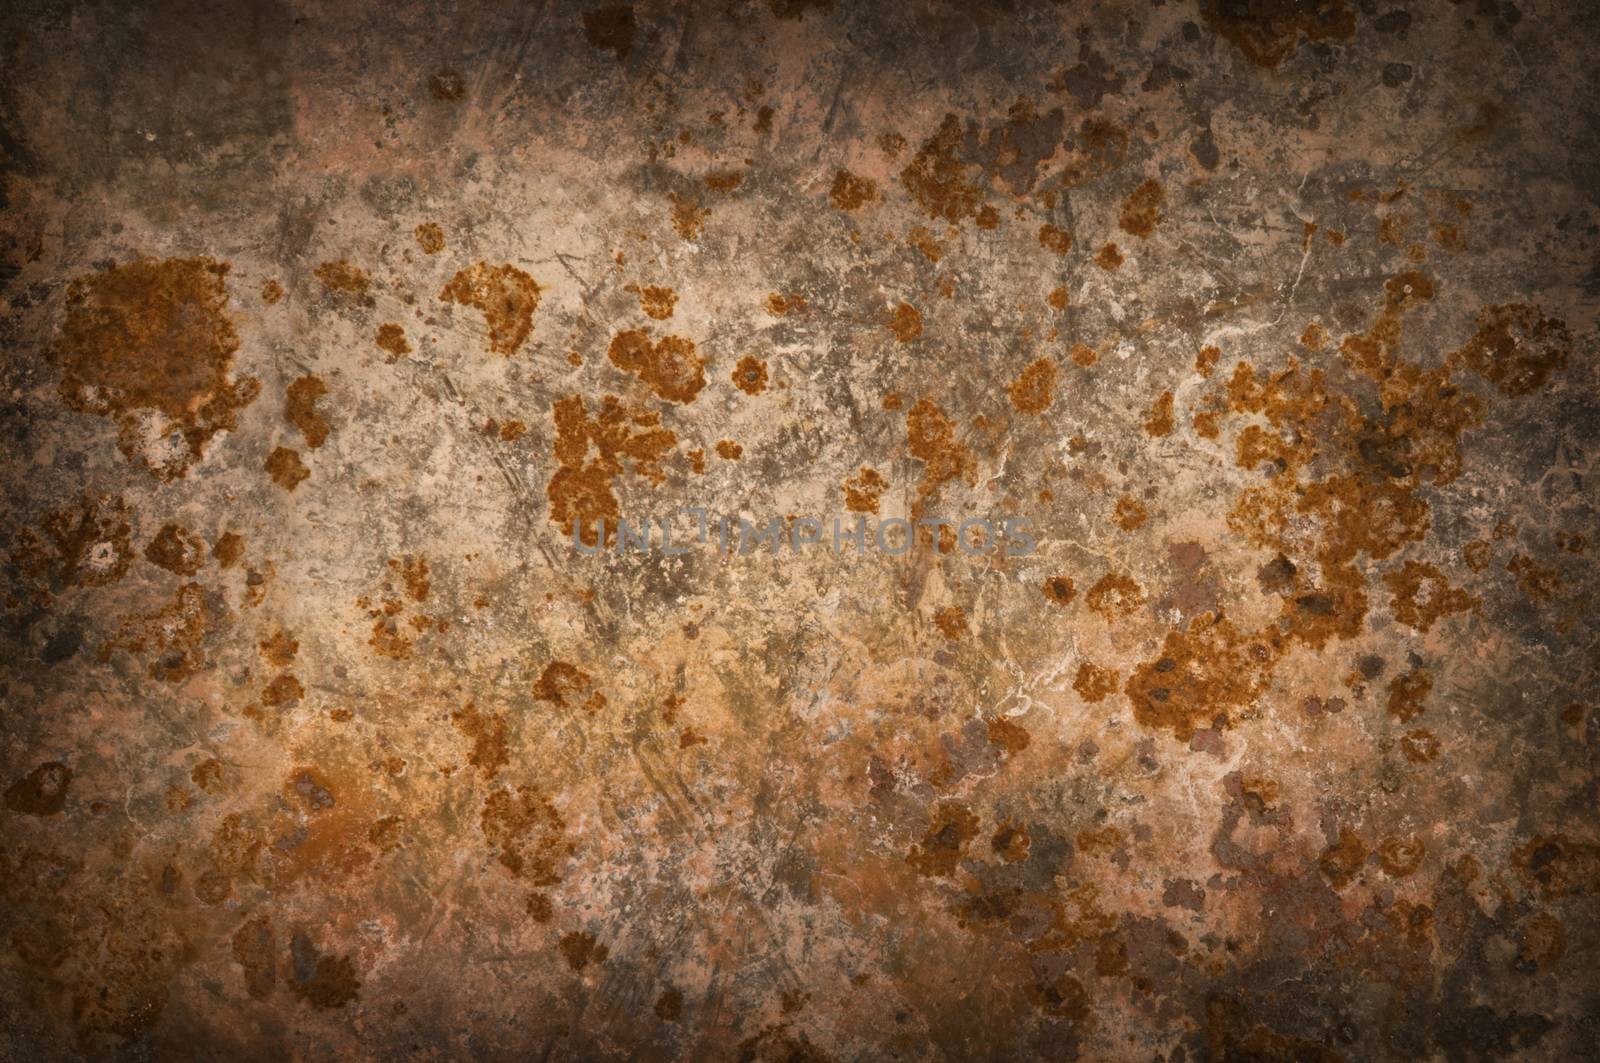 Metallic background with rusty corrosion, darkened around the edges